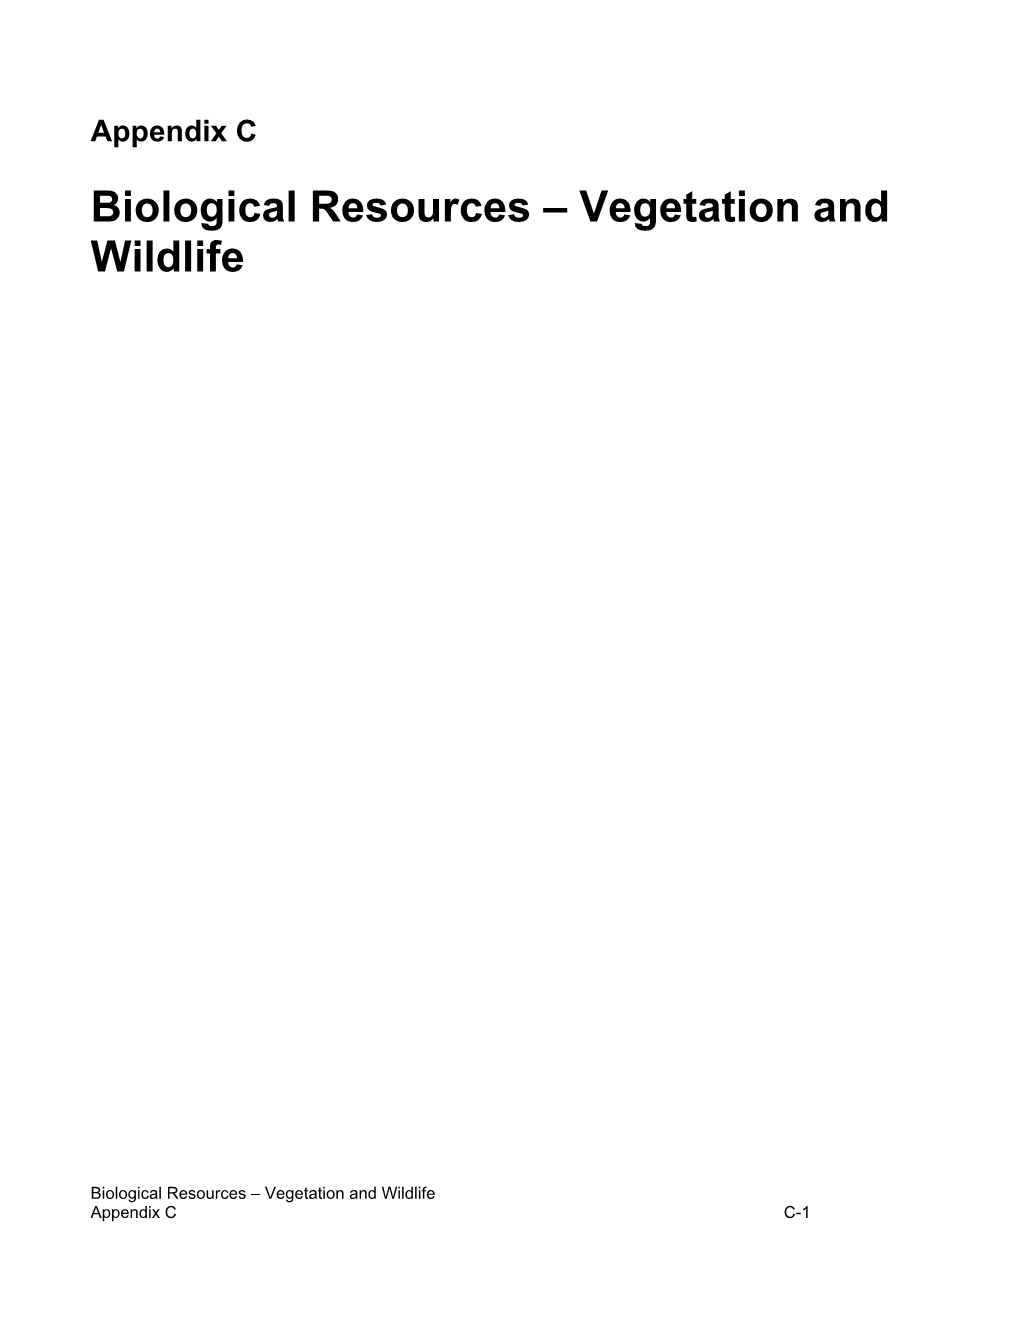 Appendix C Biological Resources – Vegetation and Wildlife